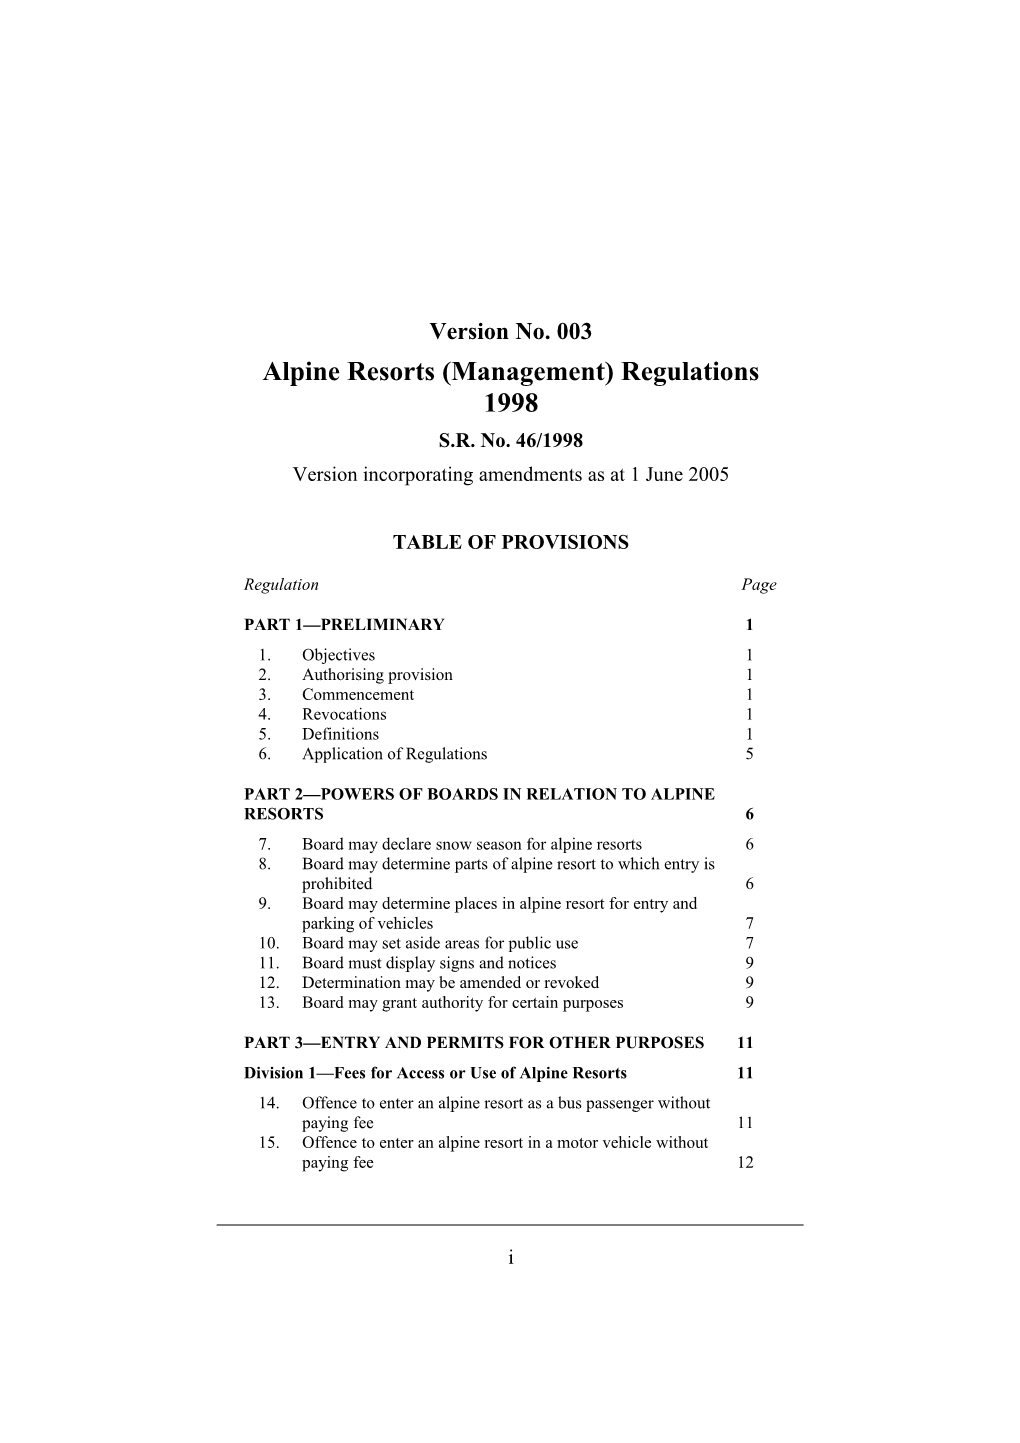 Alpine Resorts (Management) Regulations 1998